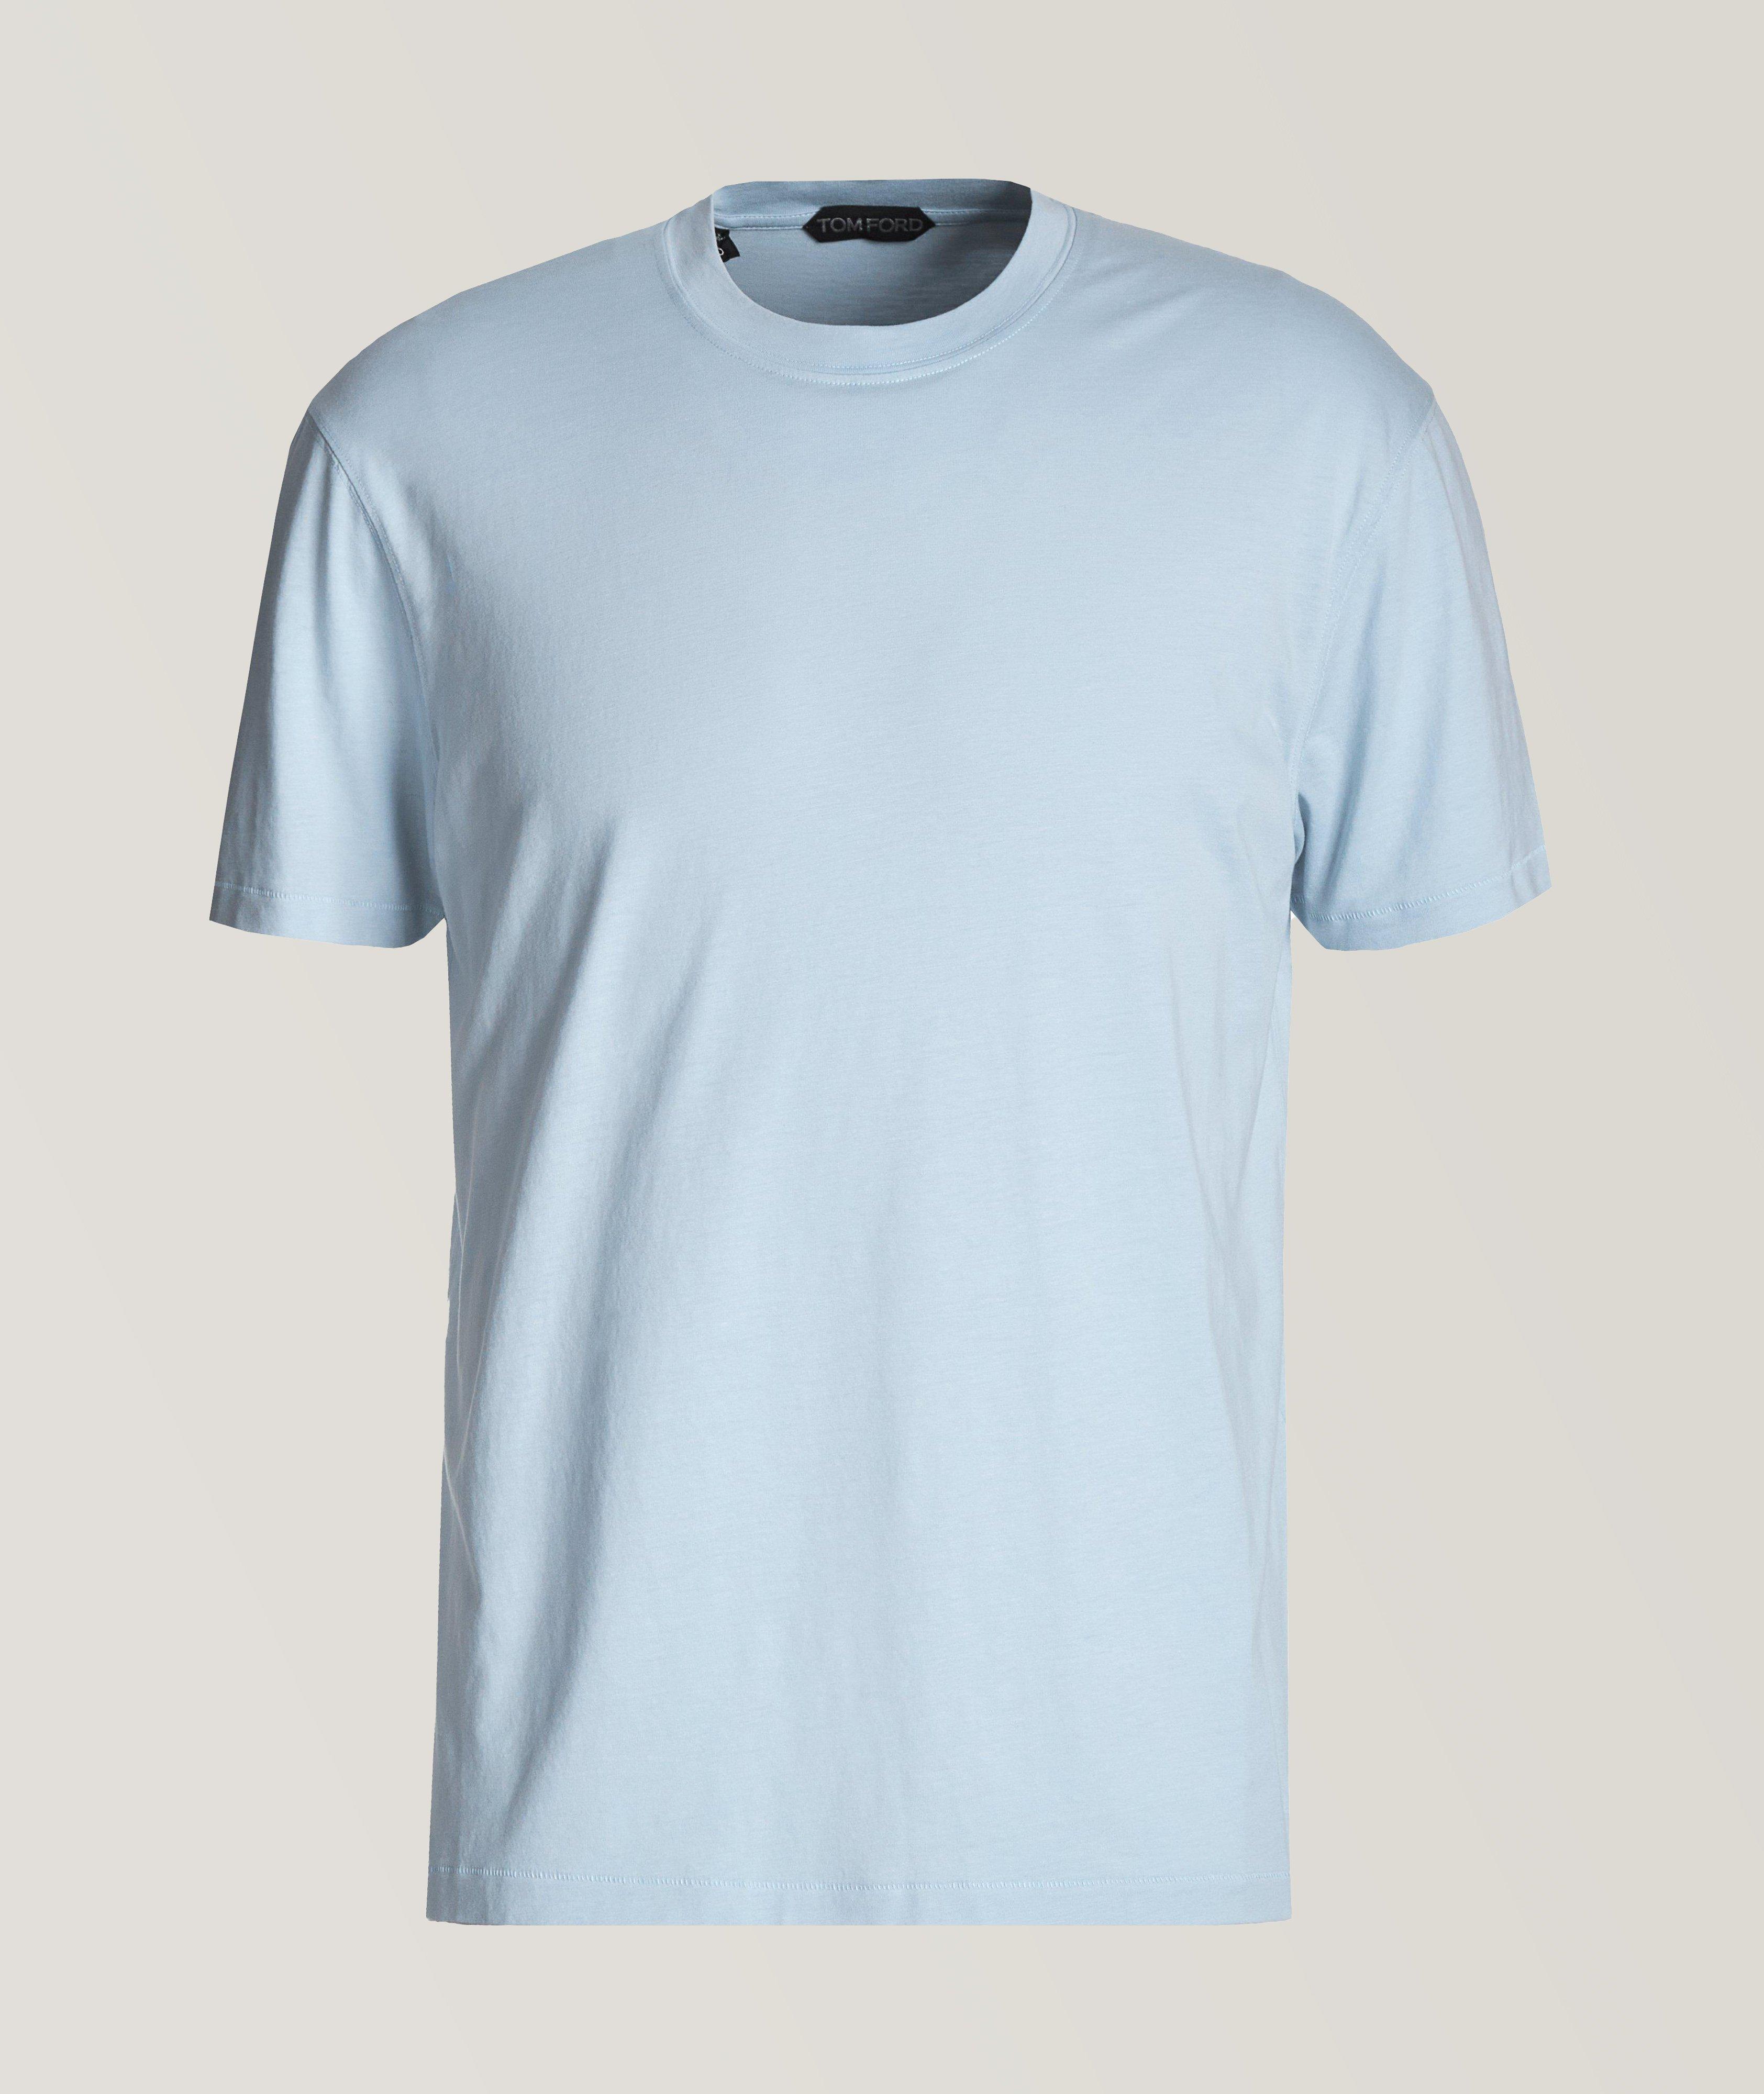 Short-Sleeve Lyocell-Cotton T-Shirt image 0